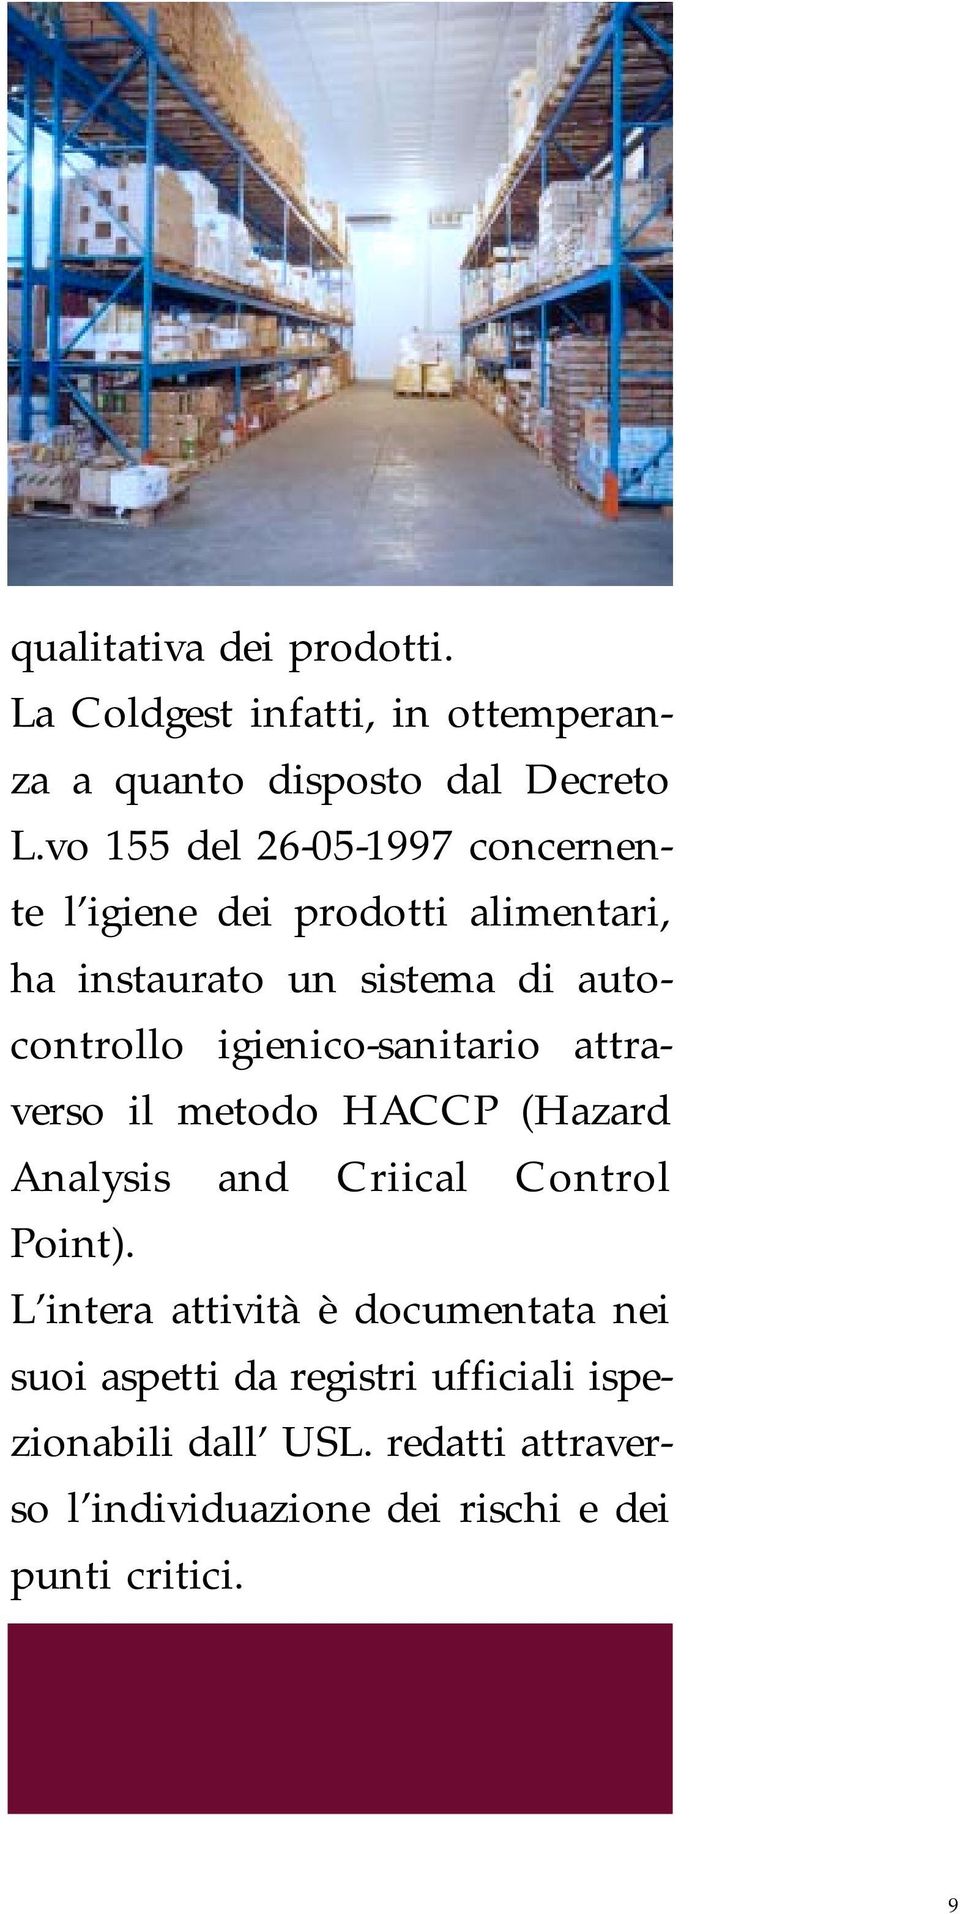 igienico-sanitario attraverso il metodo HACCP (Hazard Analysis and Criical Control Point).